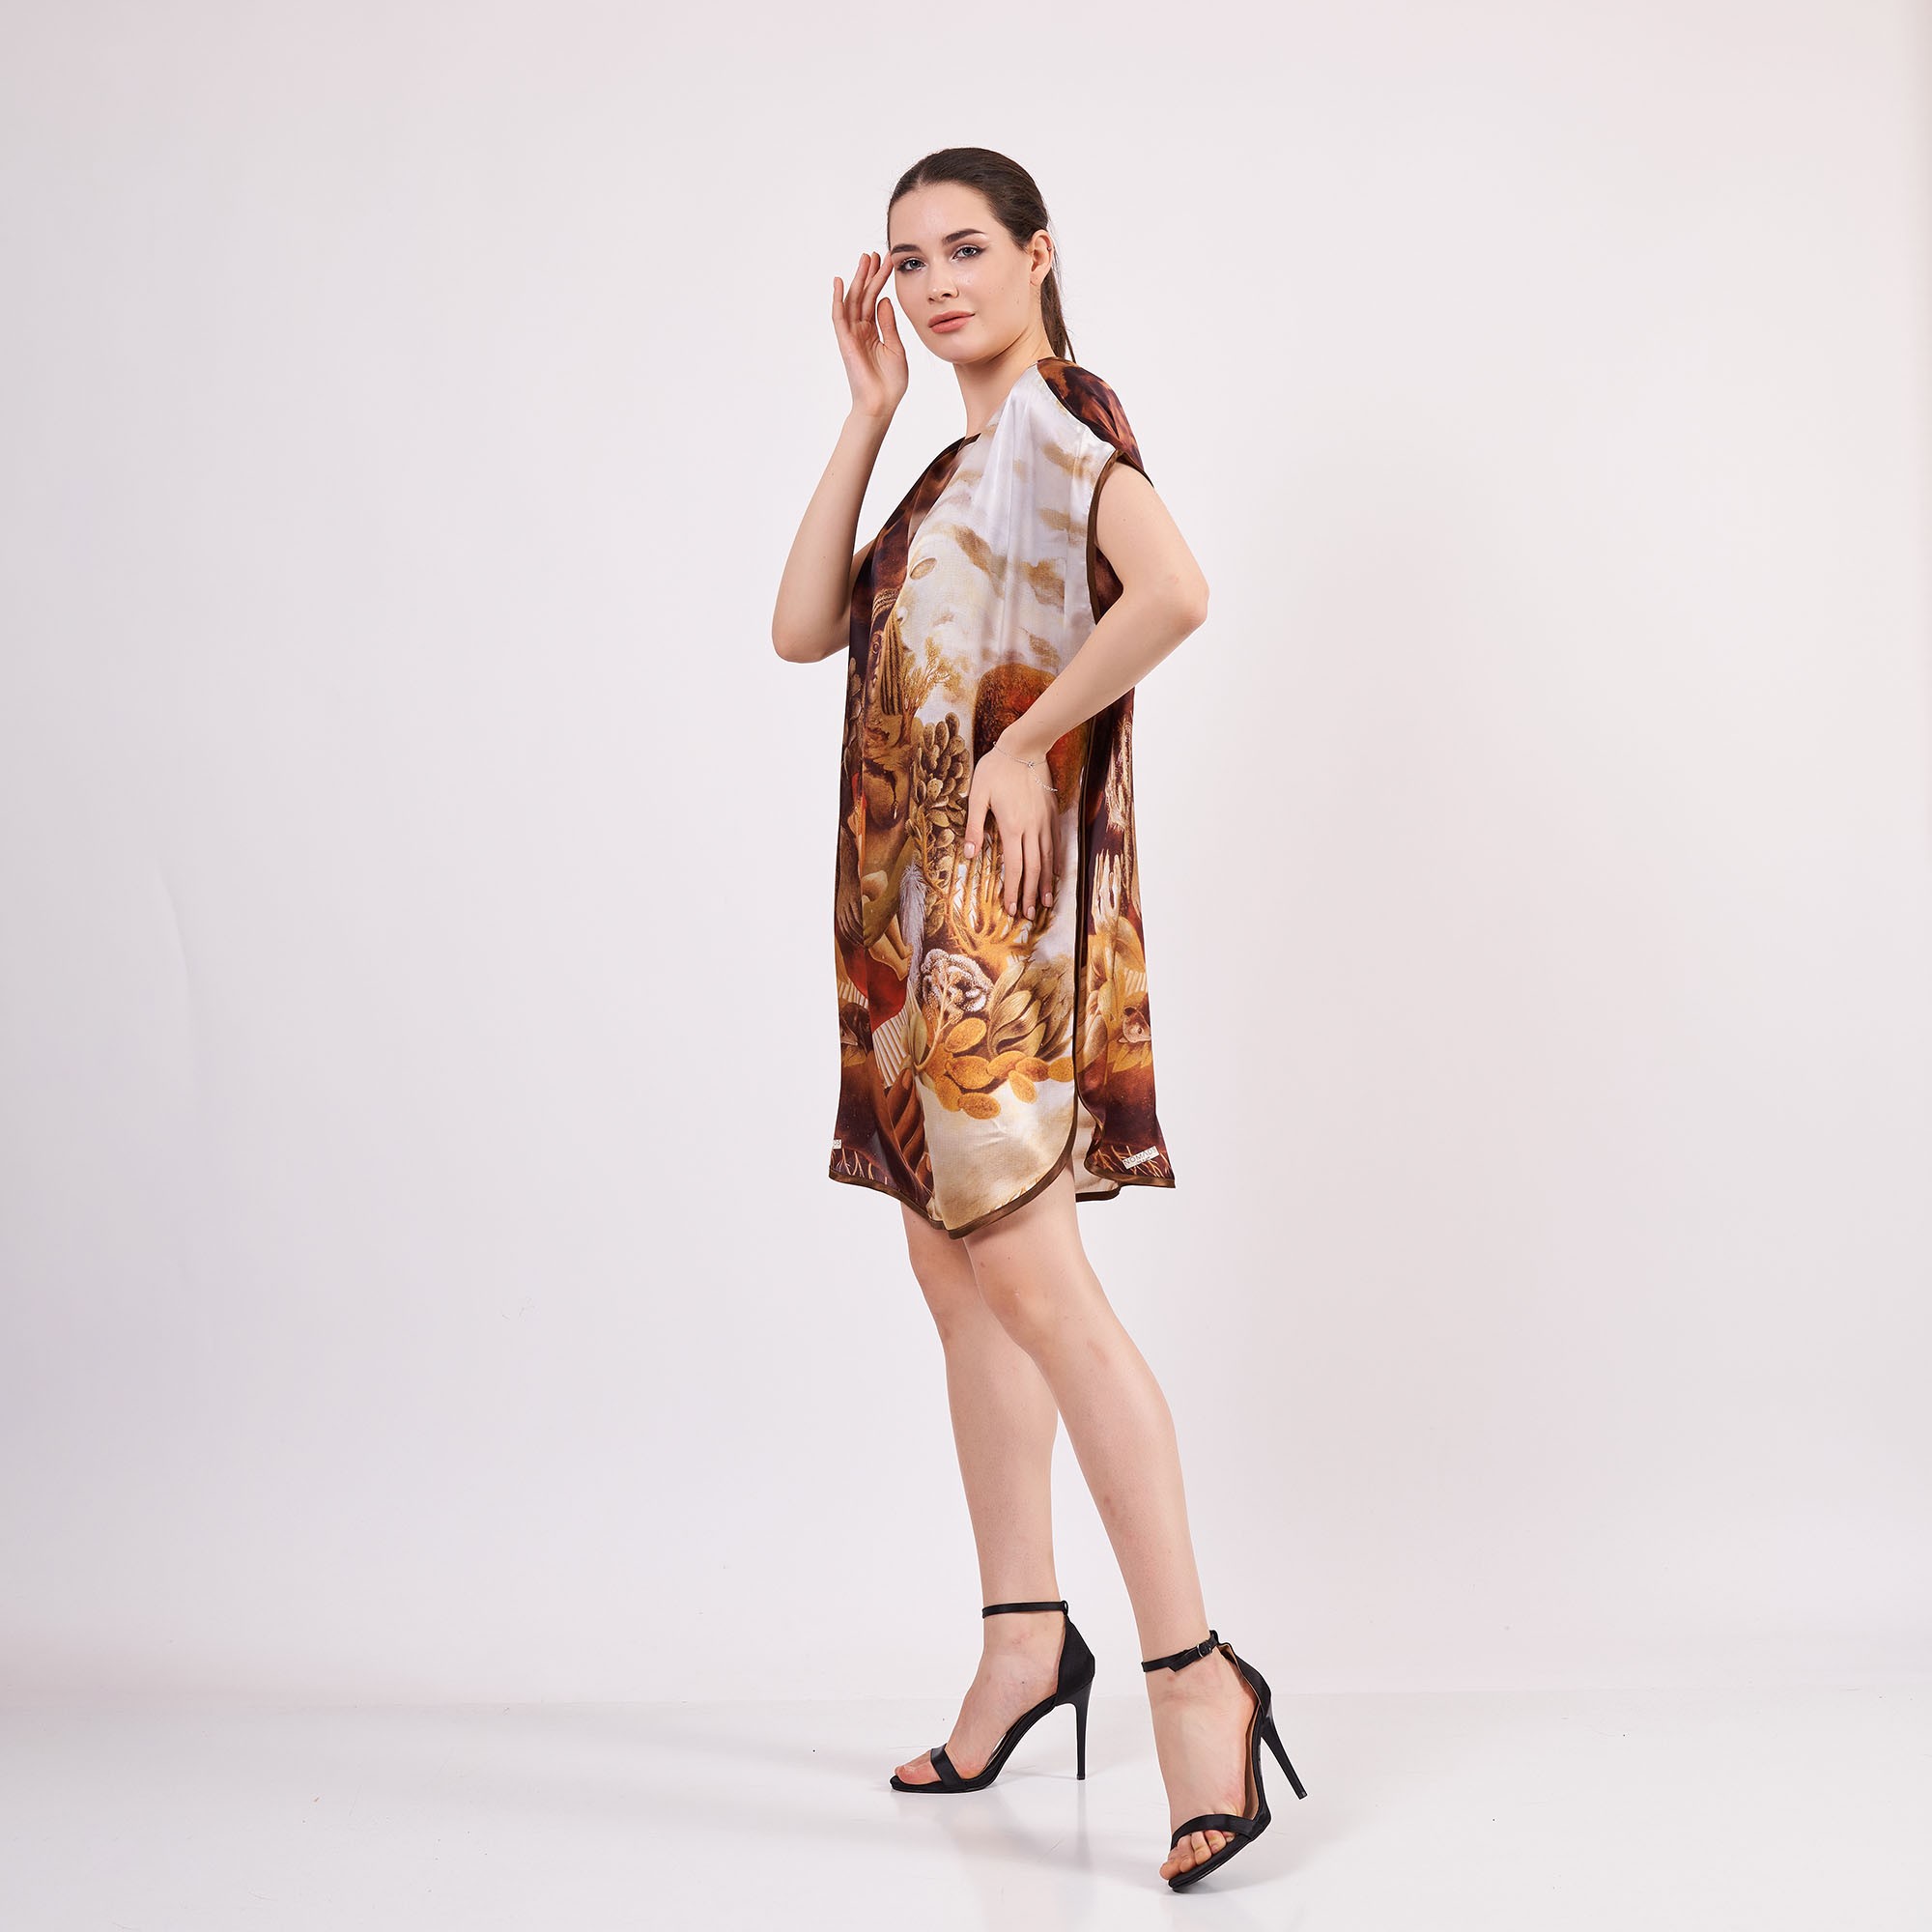 Pure Silk Plus Size Short Dress For Women | Oversized Short Kaftan Frida Kahlo 4 | Loose Fitting Dress